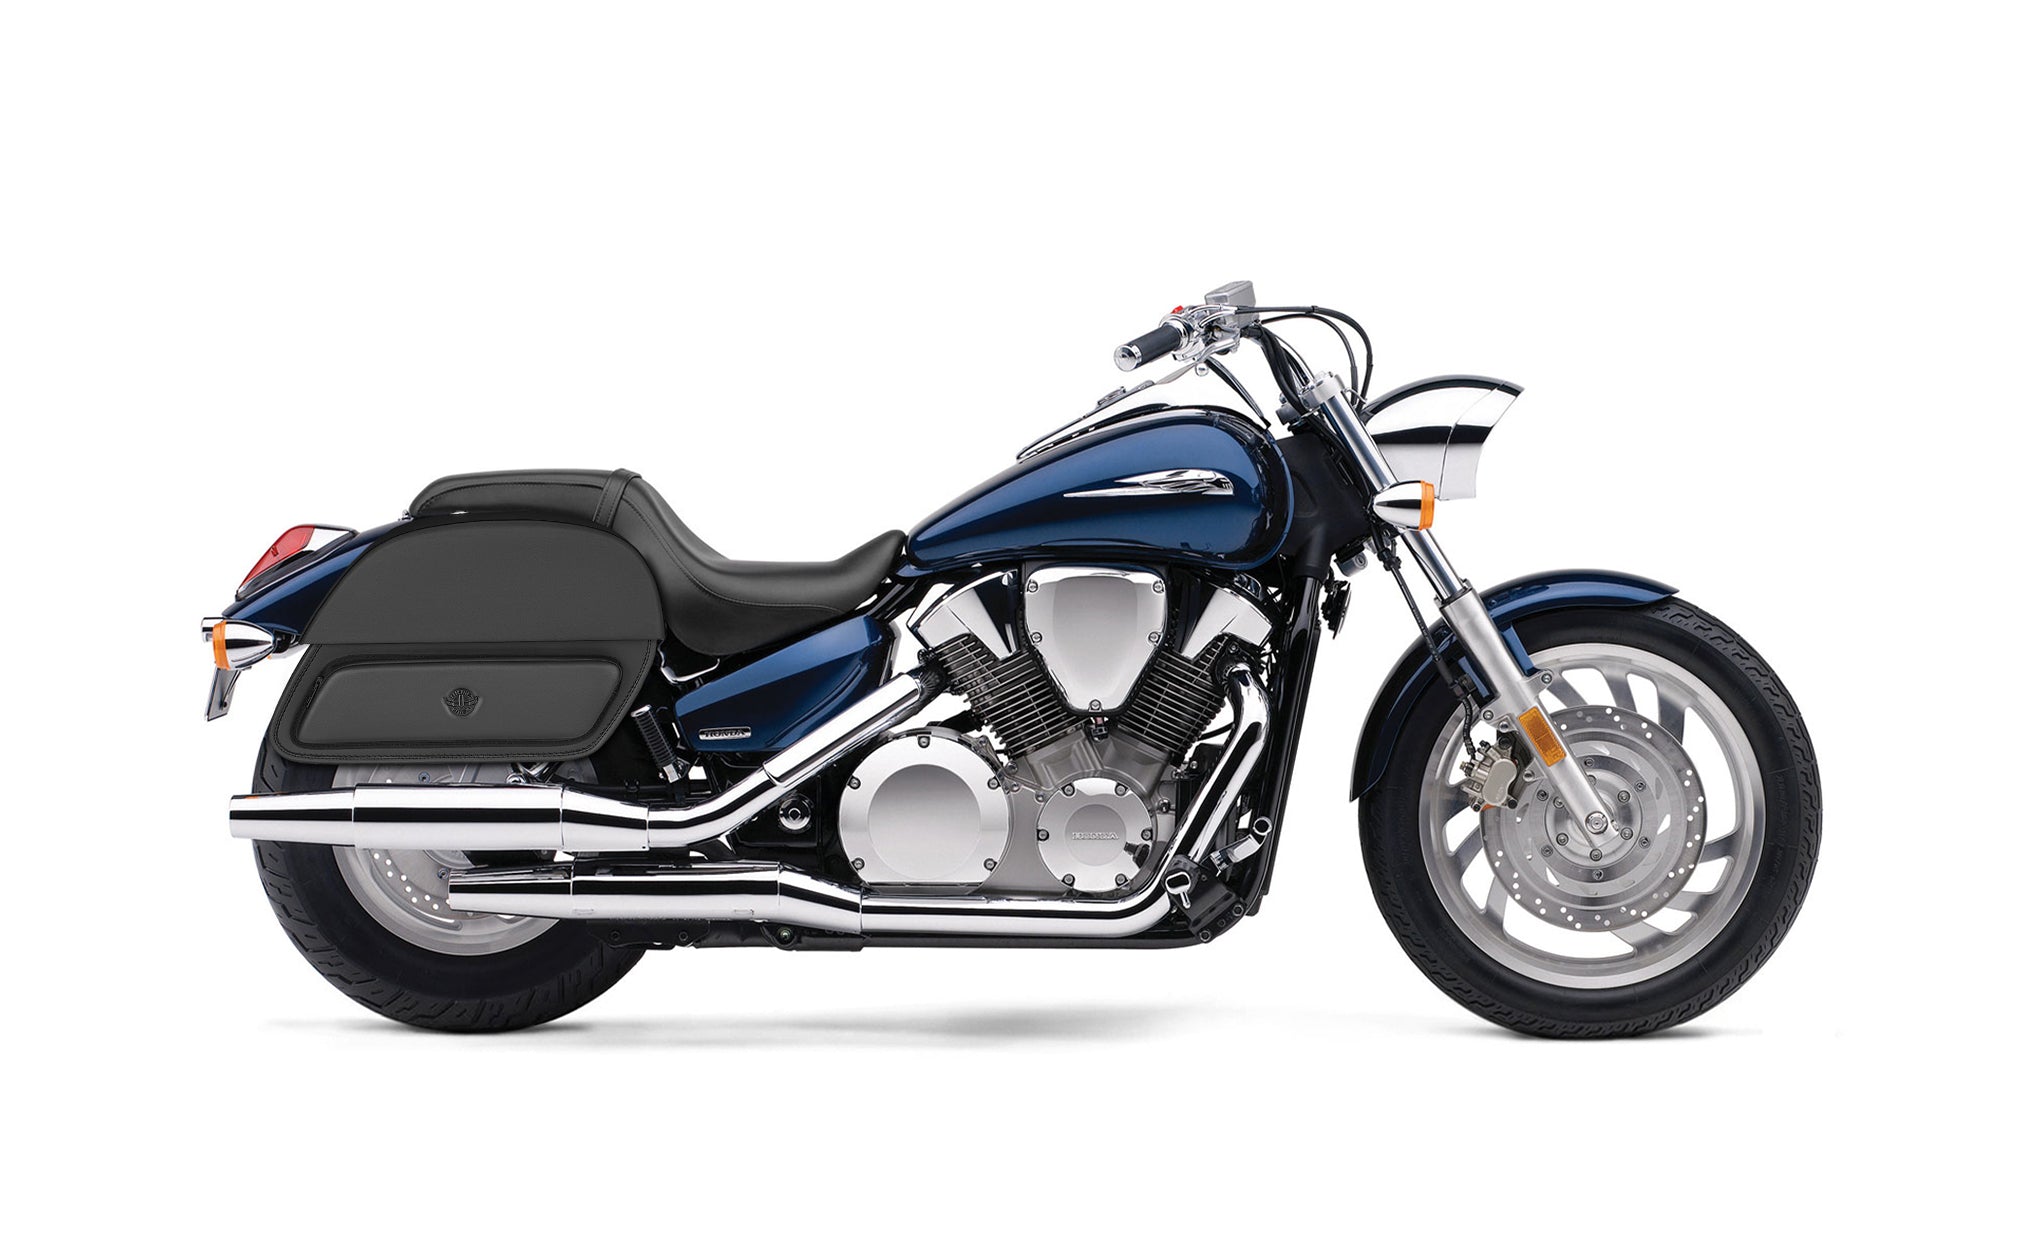 28L - Pantheon Medium Honda VTX 1300 C Motorcycle Saddlebags on Bike Photo @expand